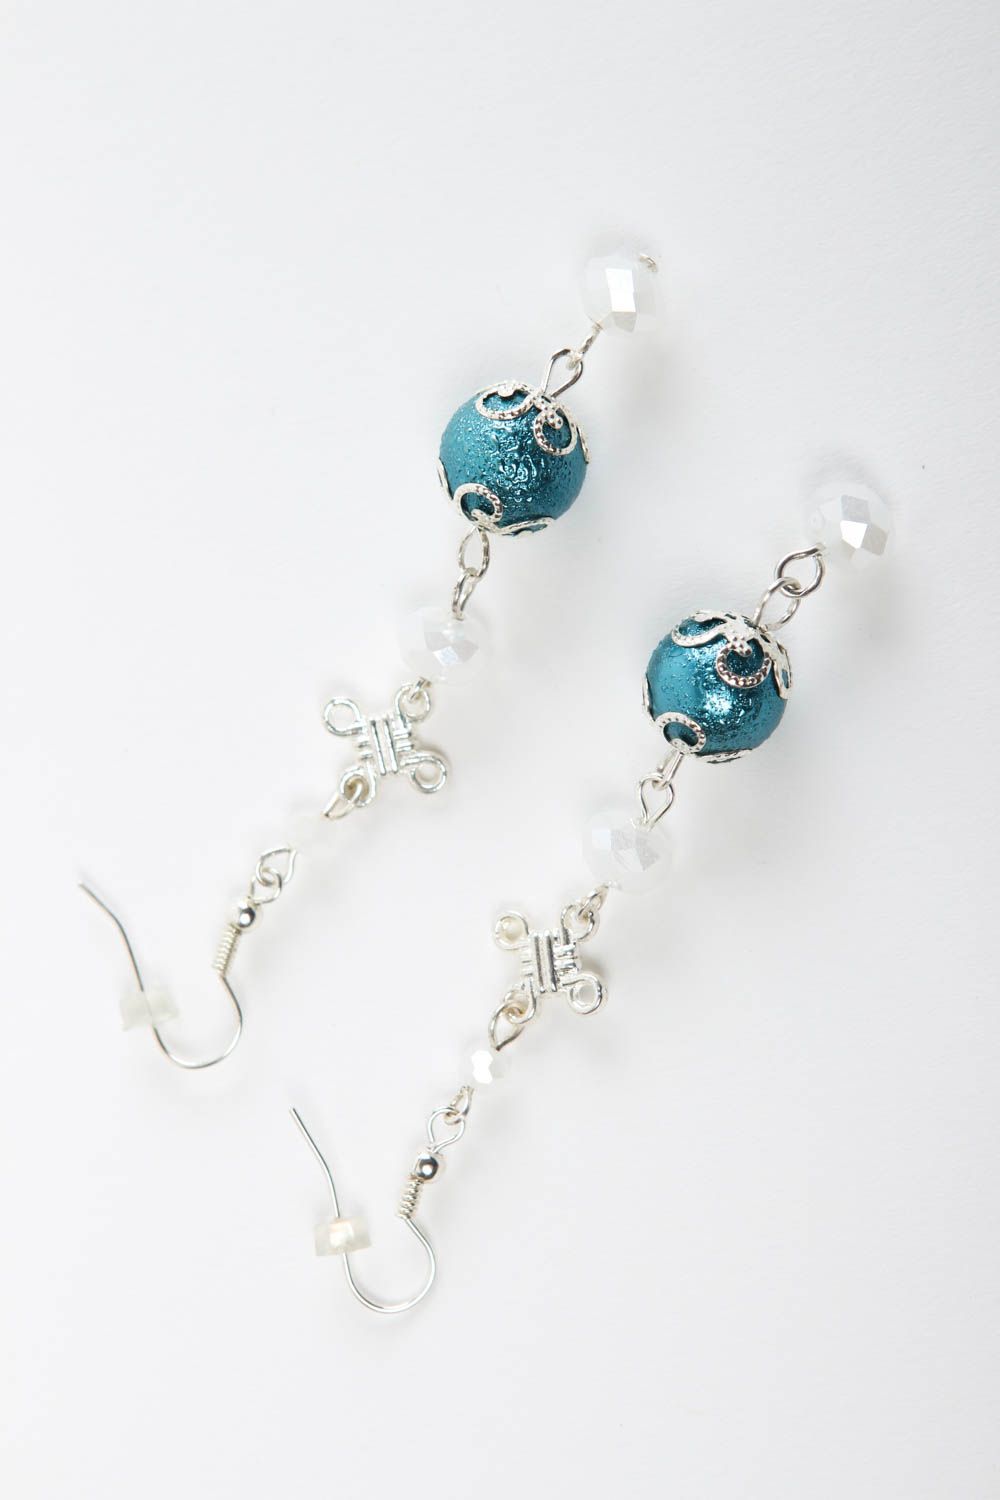 Crystal earrings handmade long crystal earrings with charms stylish jewelry photo 2